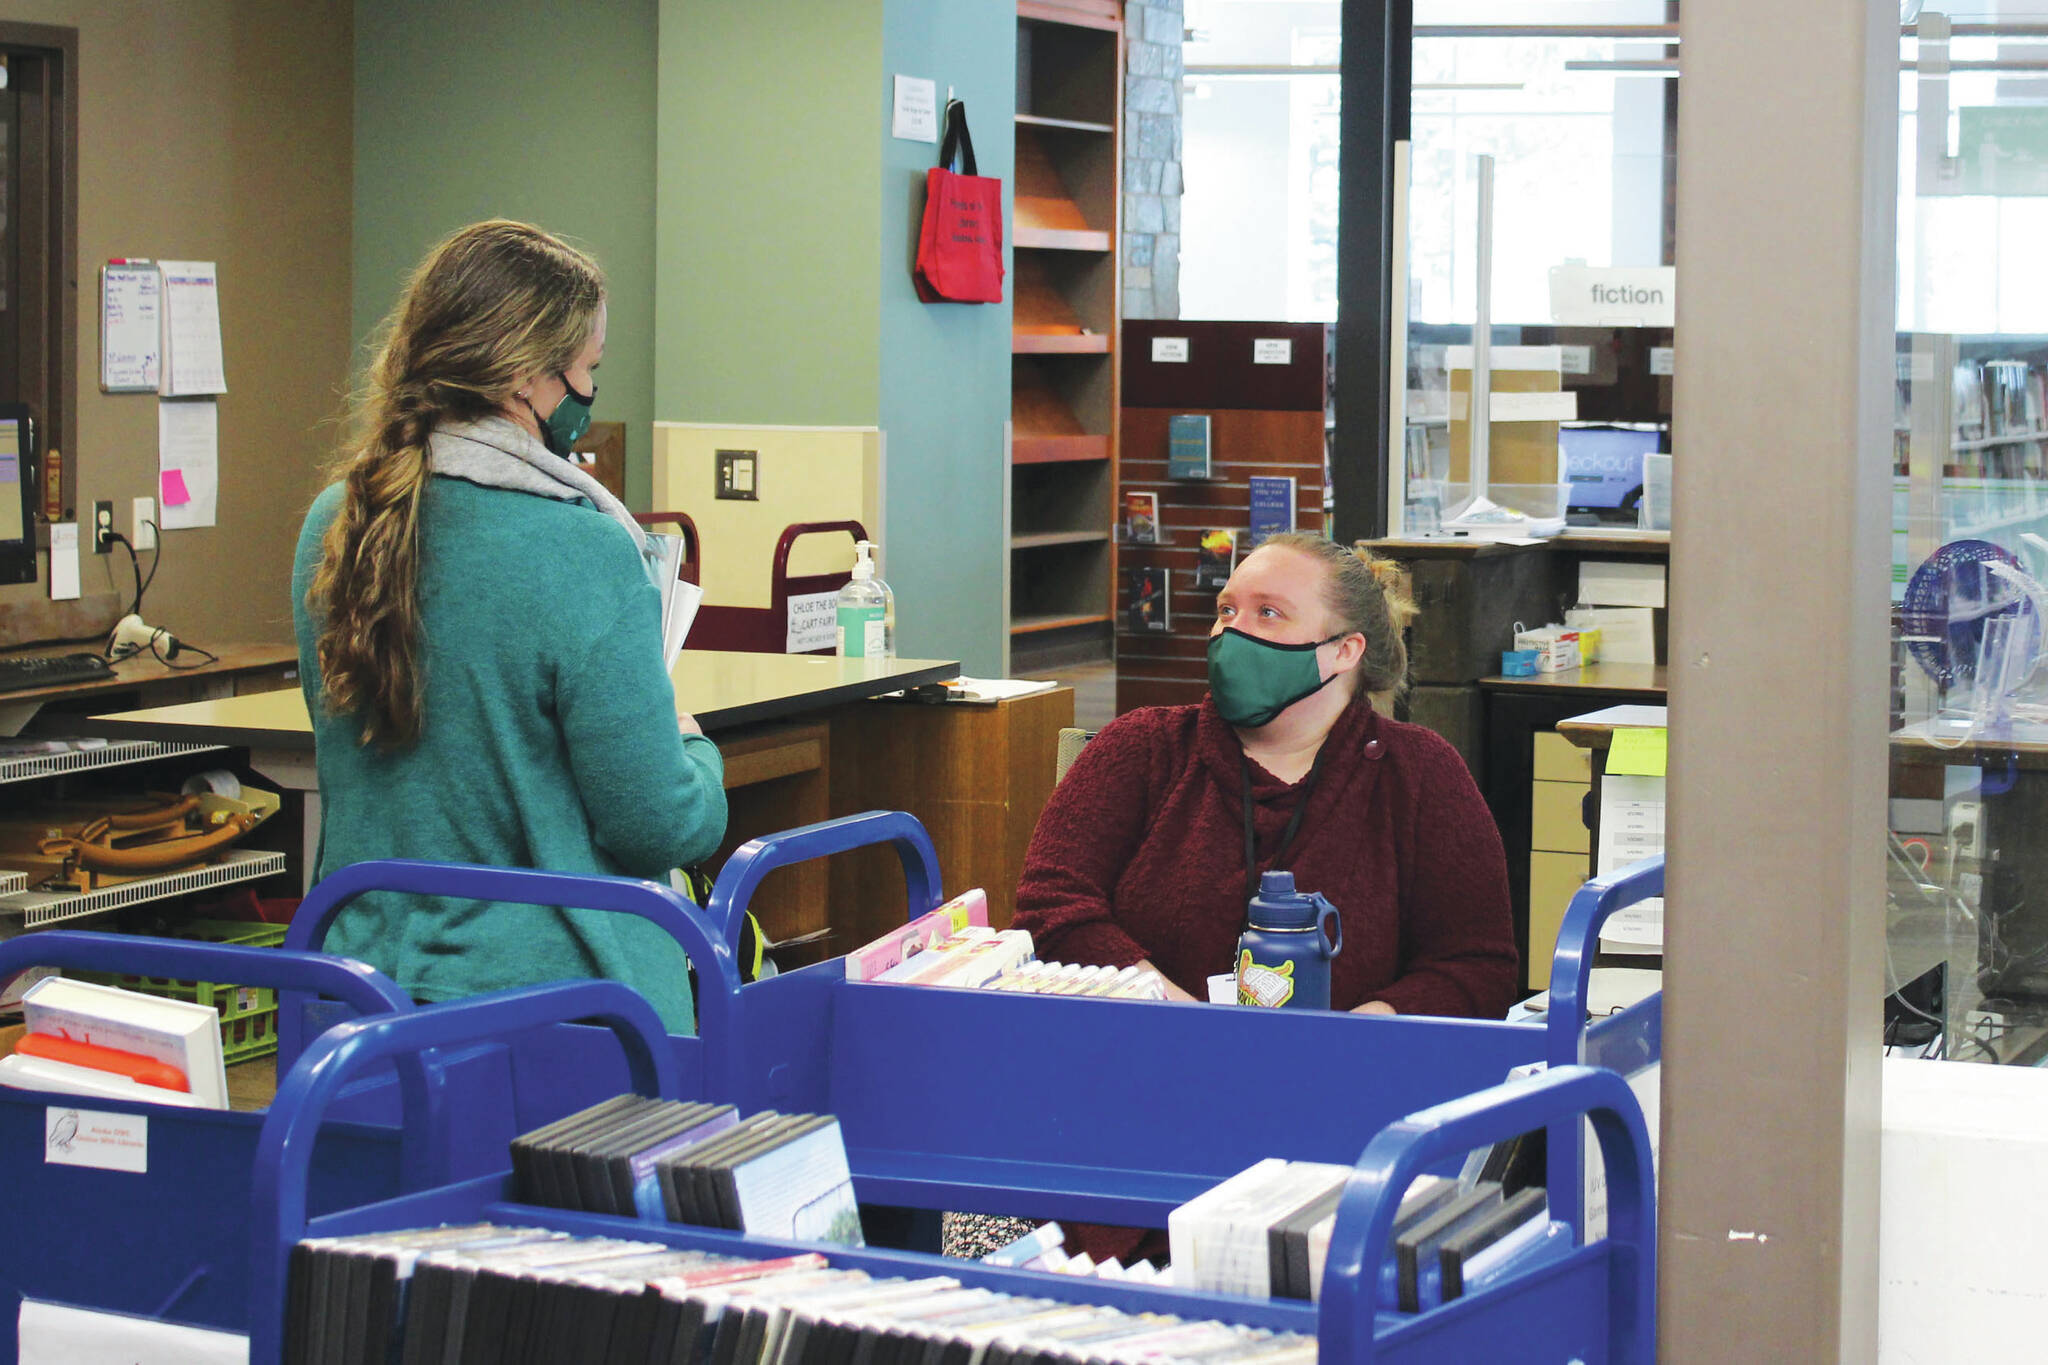 Ryanna Thurman (right) speaks to a library employee at the Soldotna Public Library on Thursday, March 25 in Soldotna, Alaska. (Ashlyn O’Hara/Peninsula Clarion)